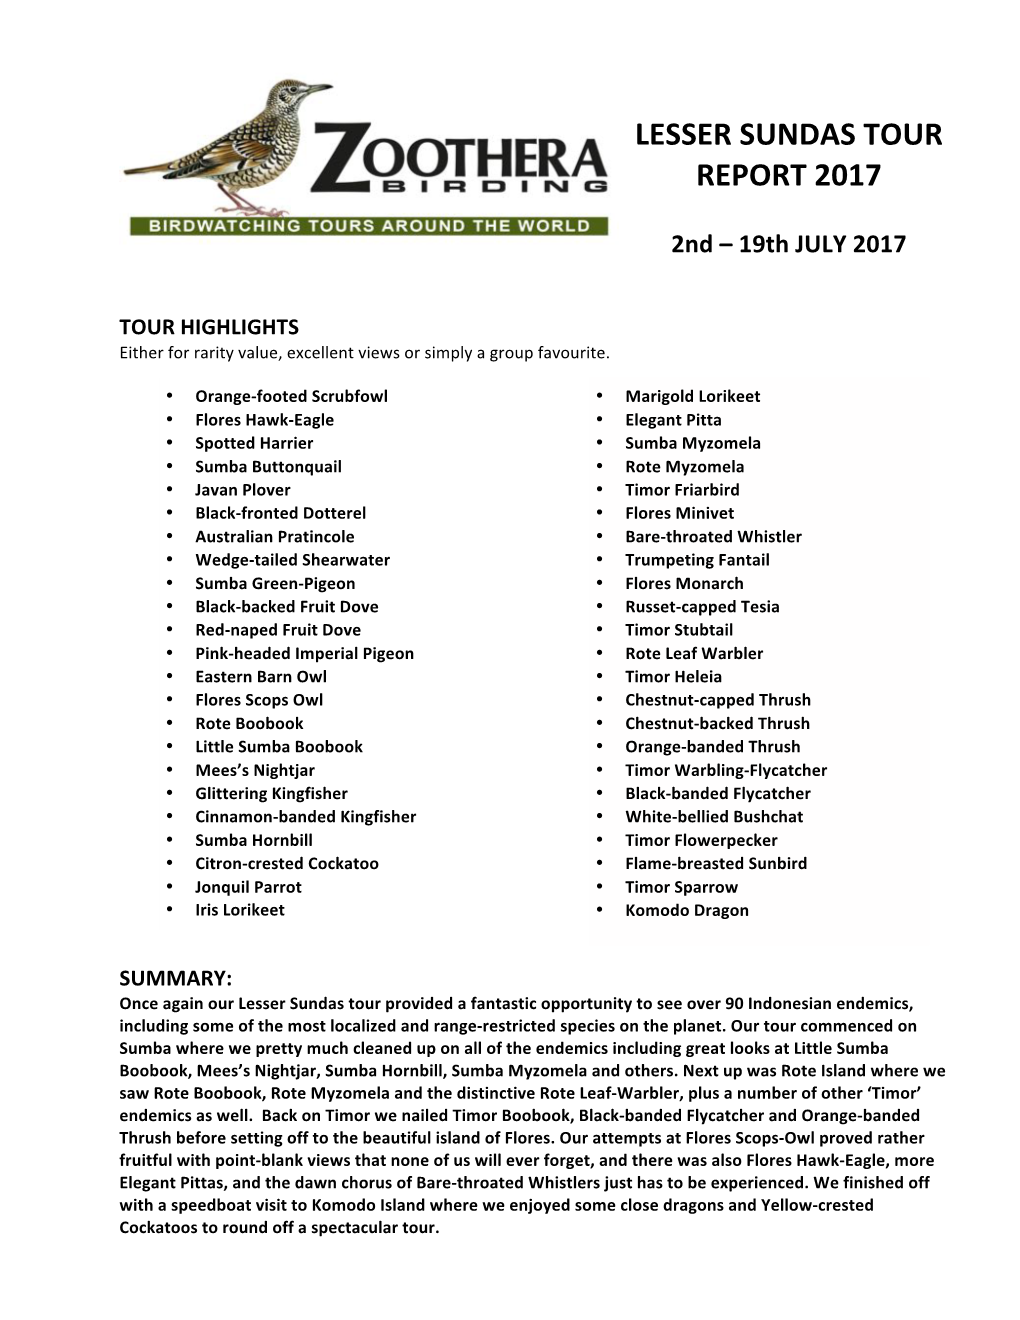 Lesser Sundas Tour Report 2017